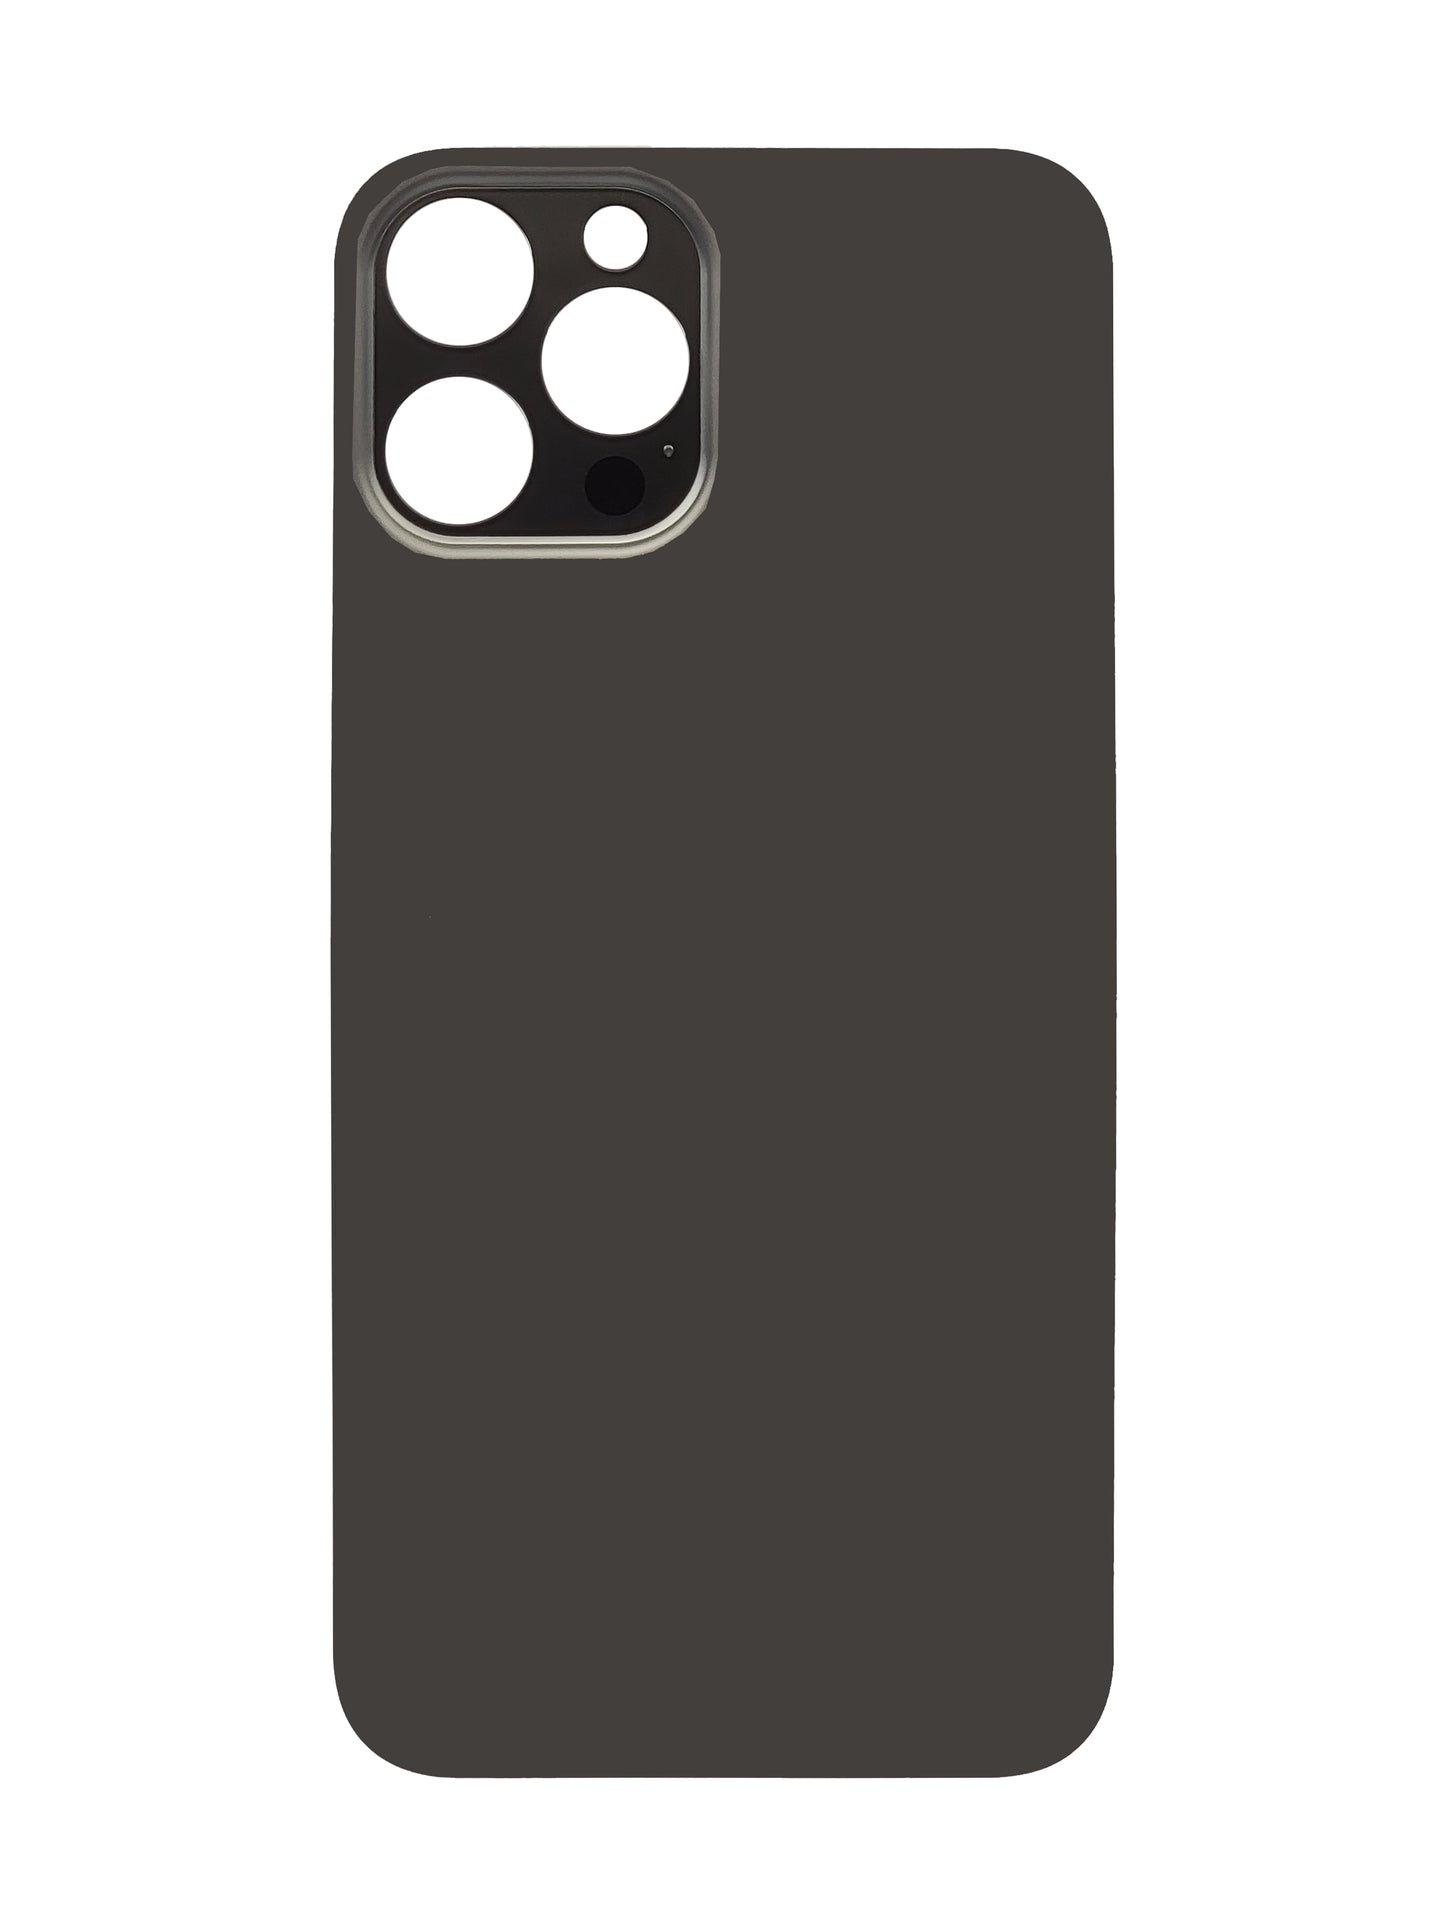 iPhone 12 Pro Max Back Glass (No Logo) (Black)